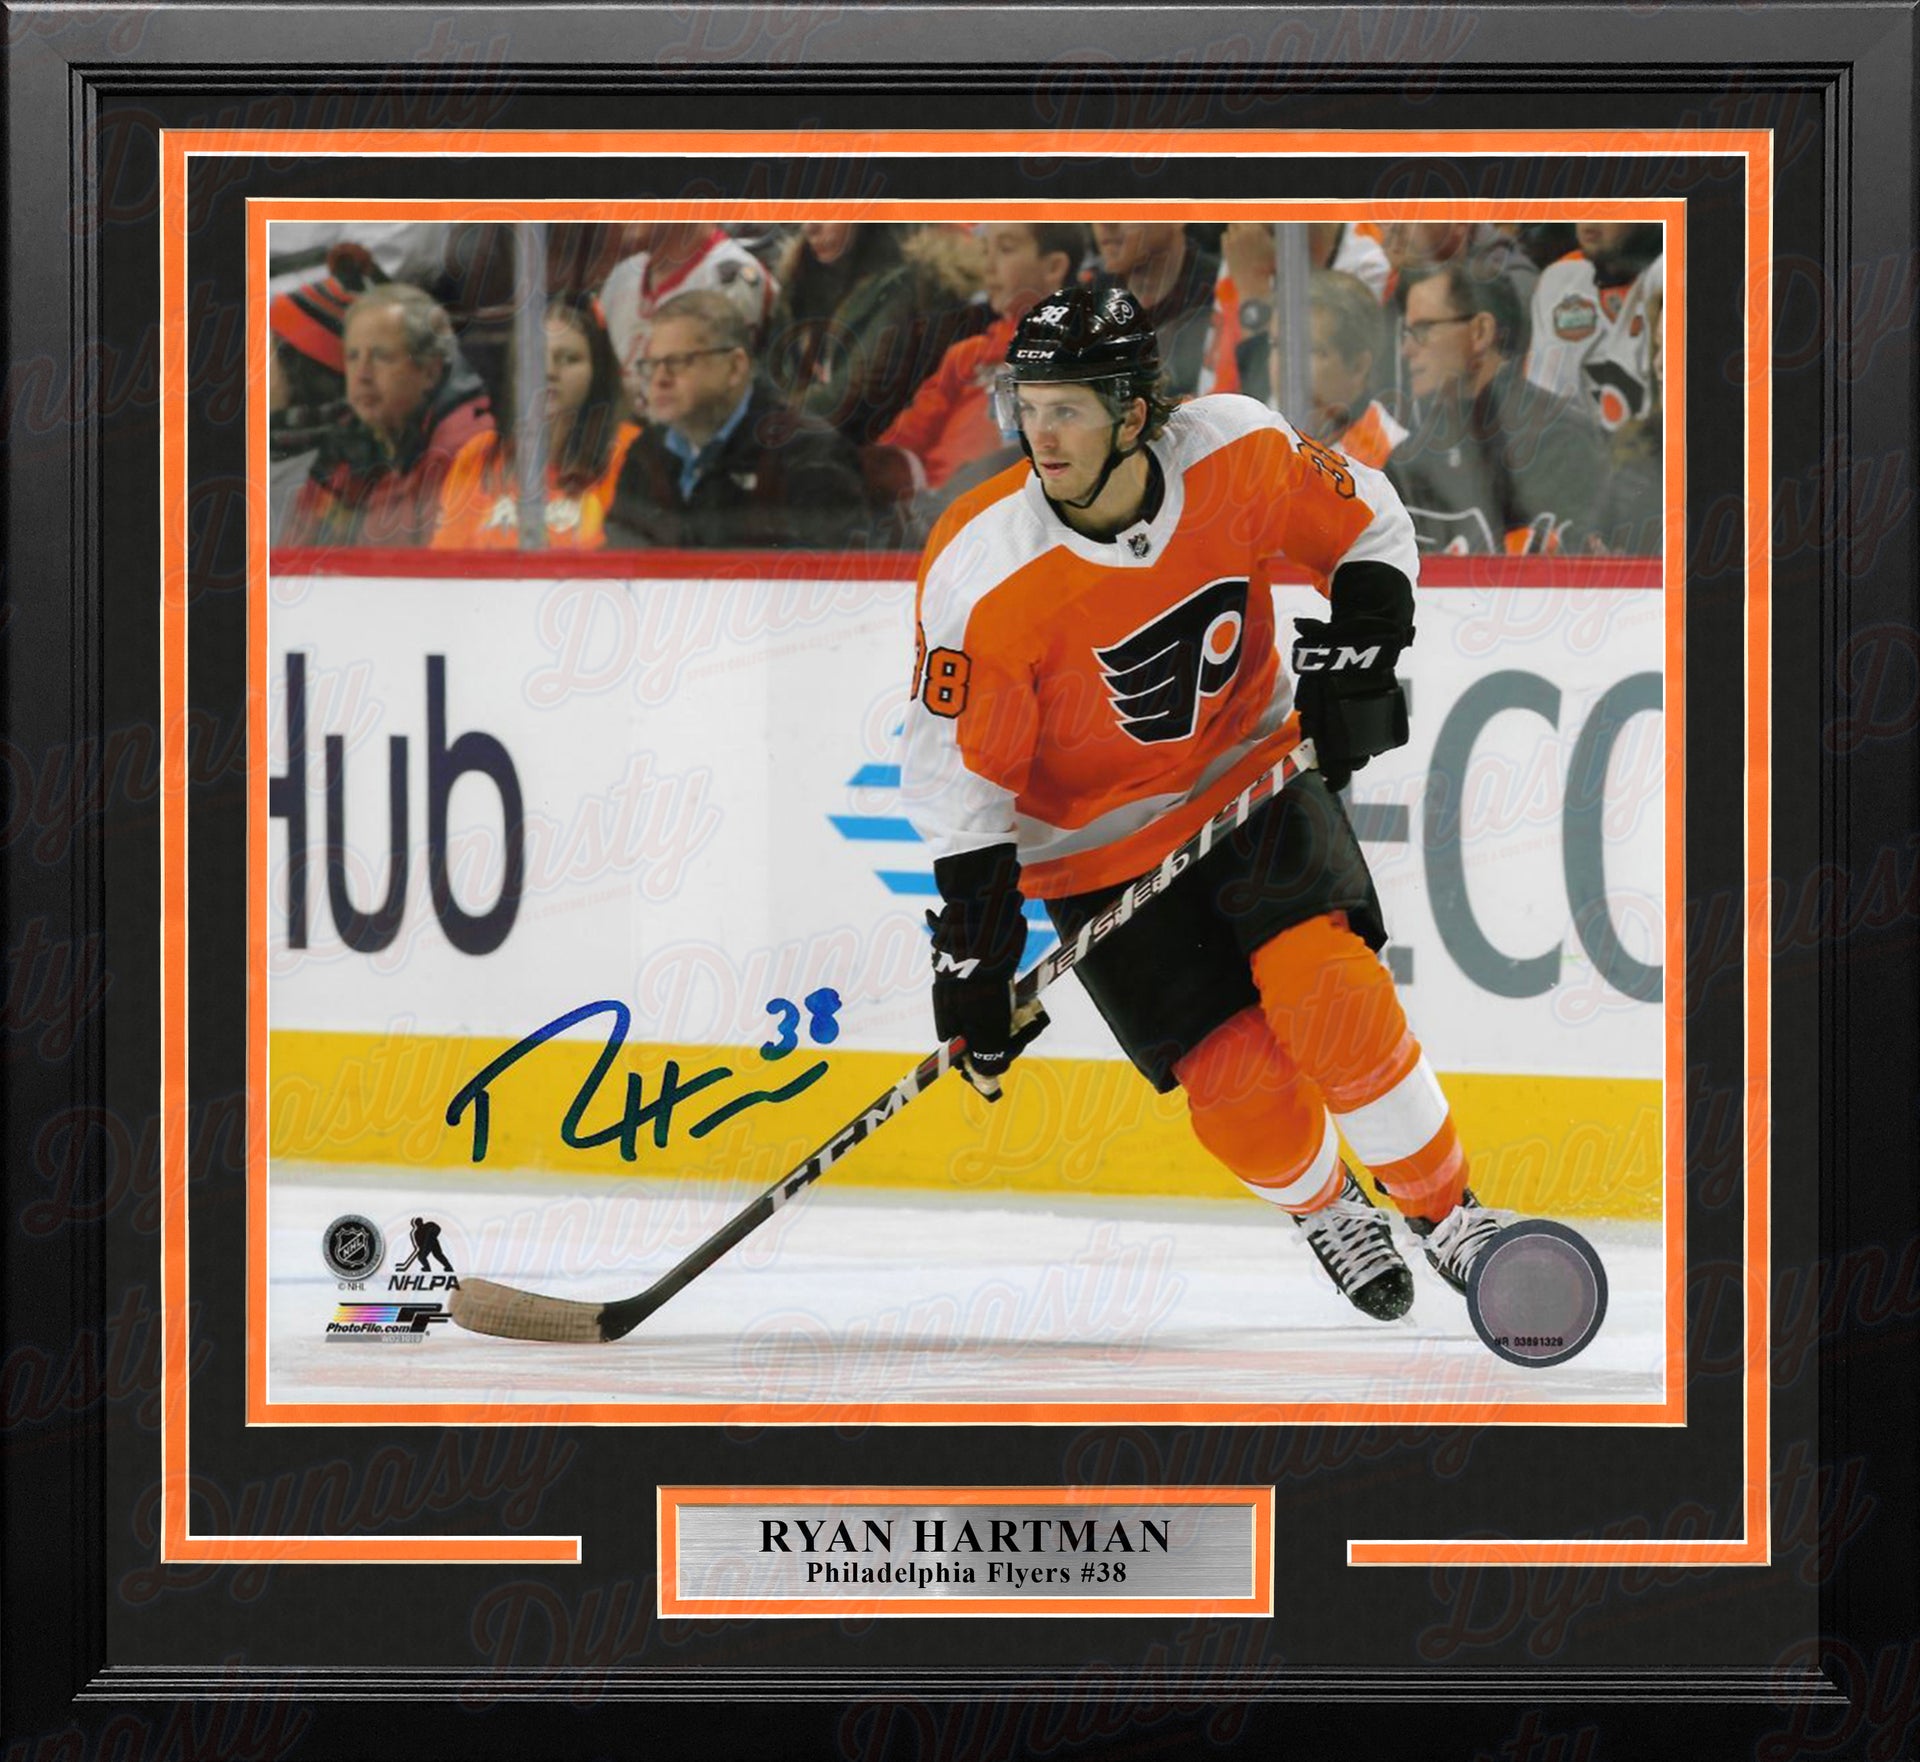 Ryan Hartman Philadelphia Flyers Autographed NHL Hockey Framed and Matted Photo - Dynasty Sports & Framing 